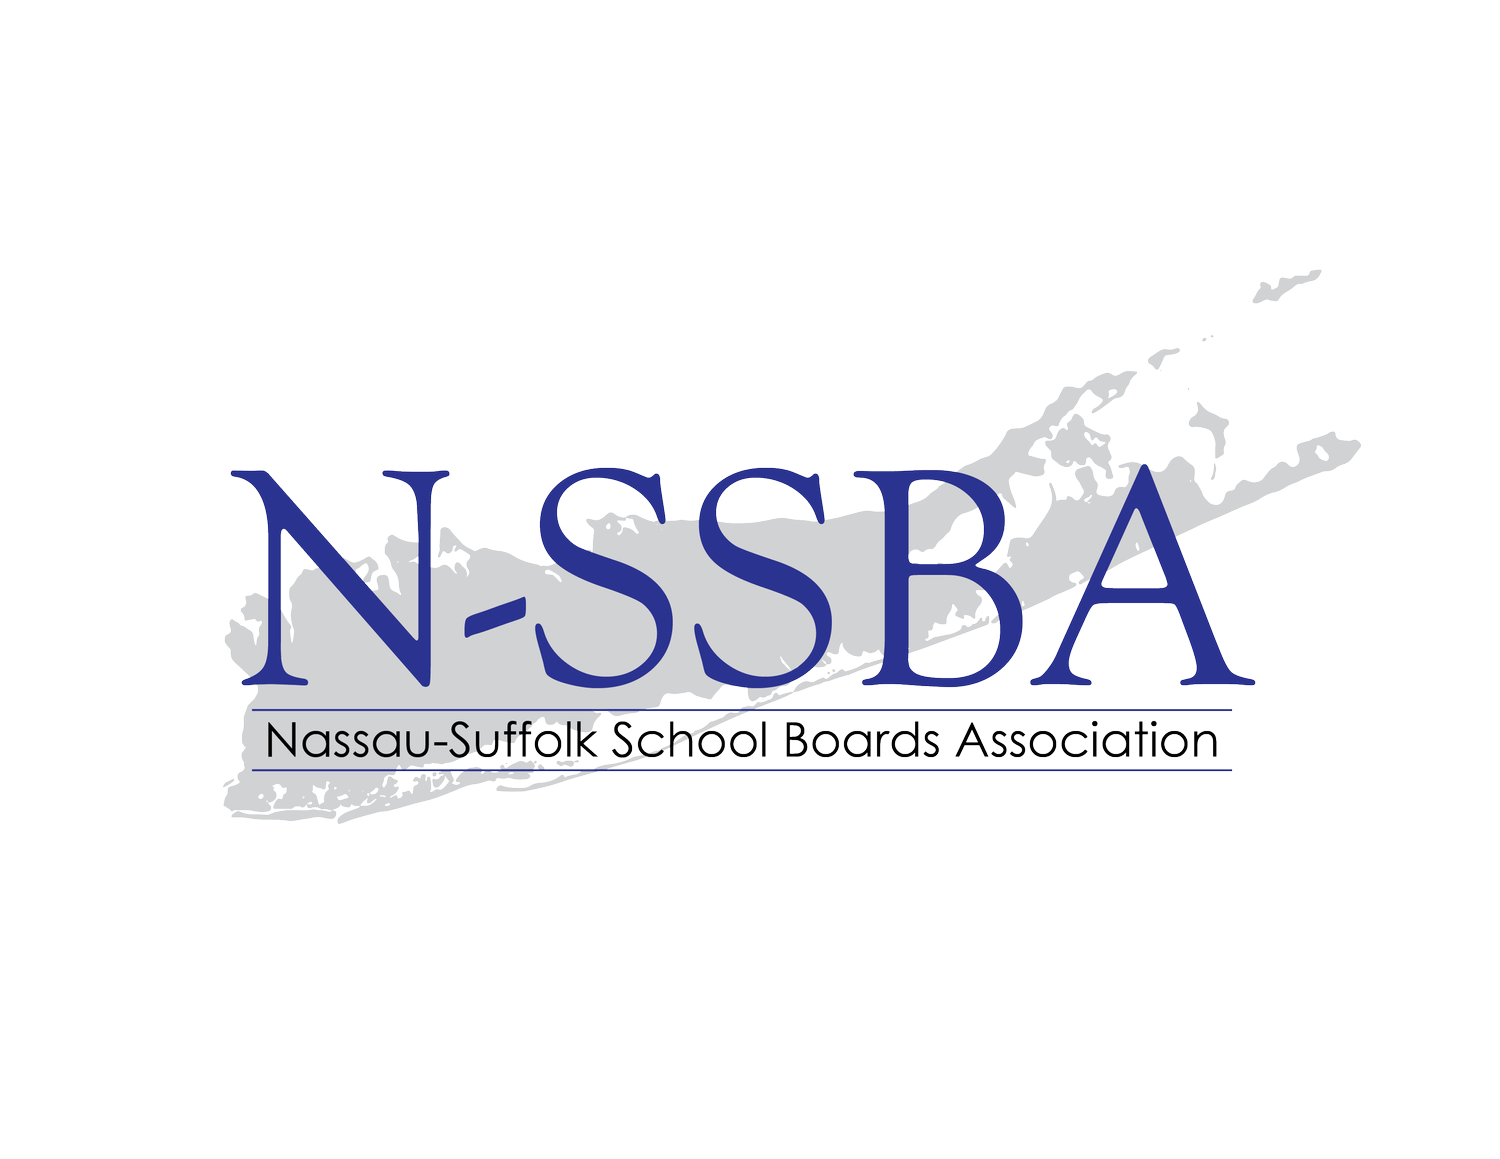 Nassau-Suffolk School Boards Association